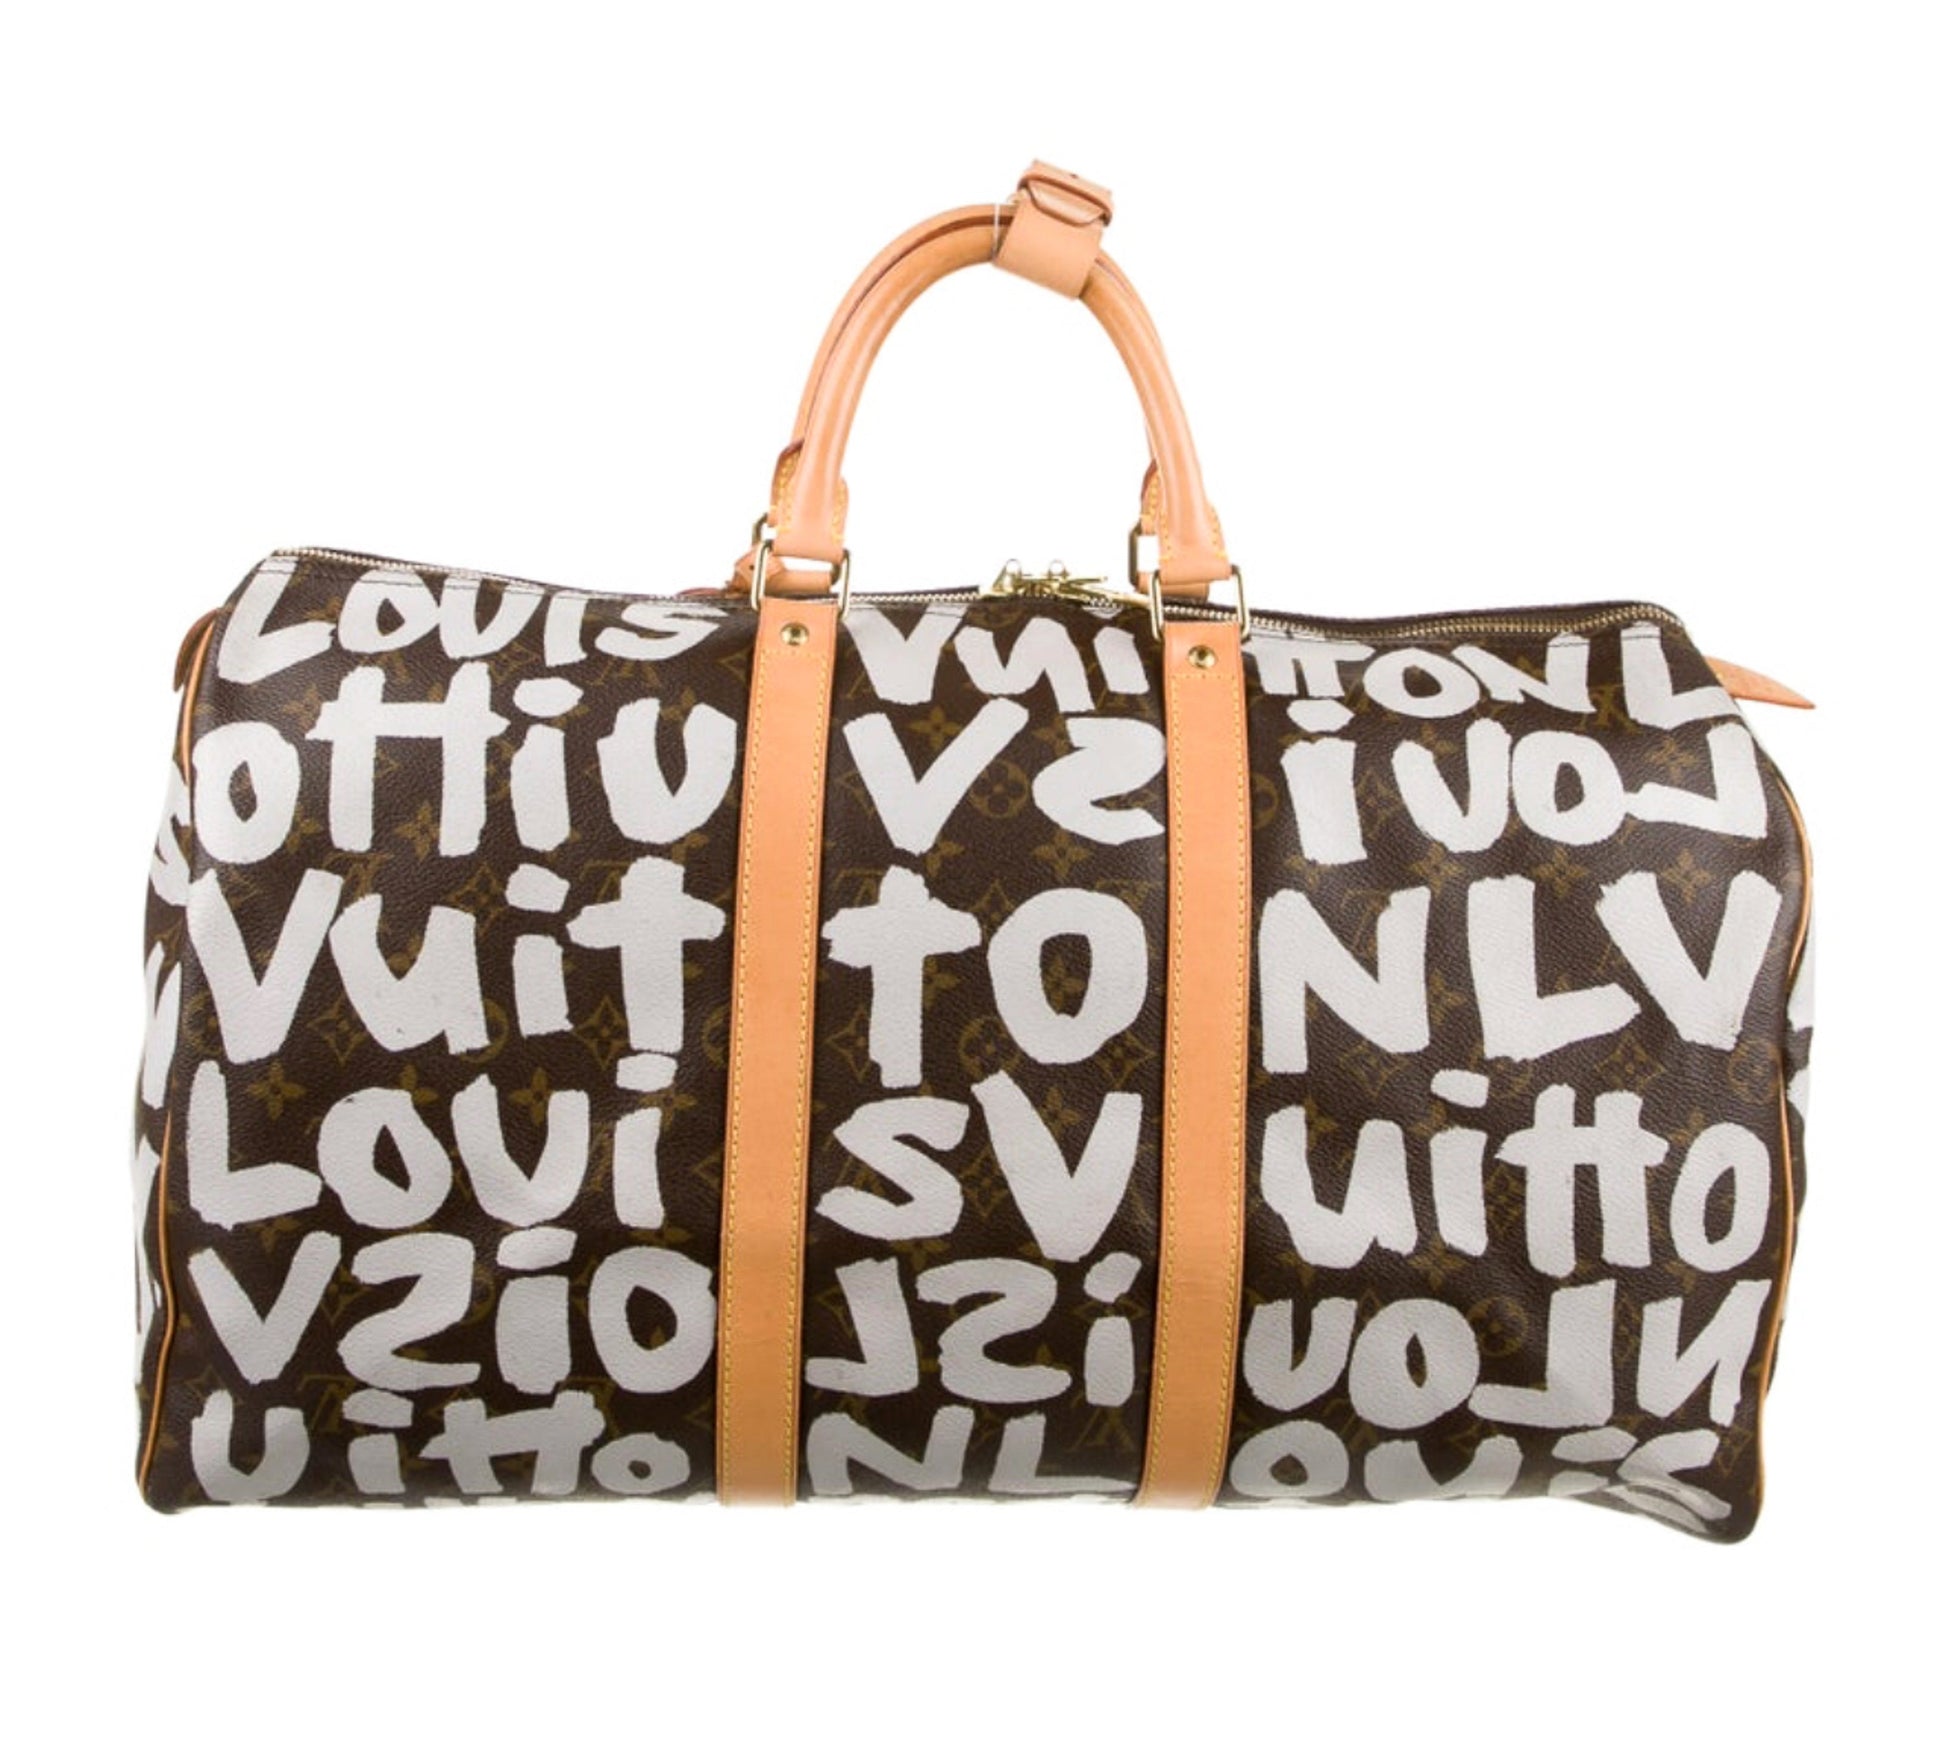 Louis Vuitton graffiti keepall 50 . Website search for AO08181. DM for  details of orange graffiti. #louisvuitton #vintagevuitton